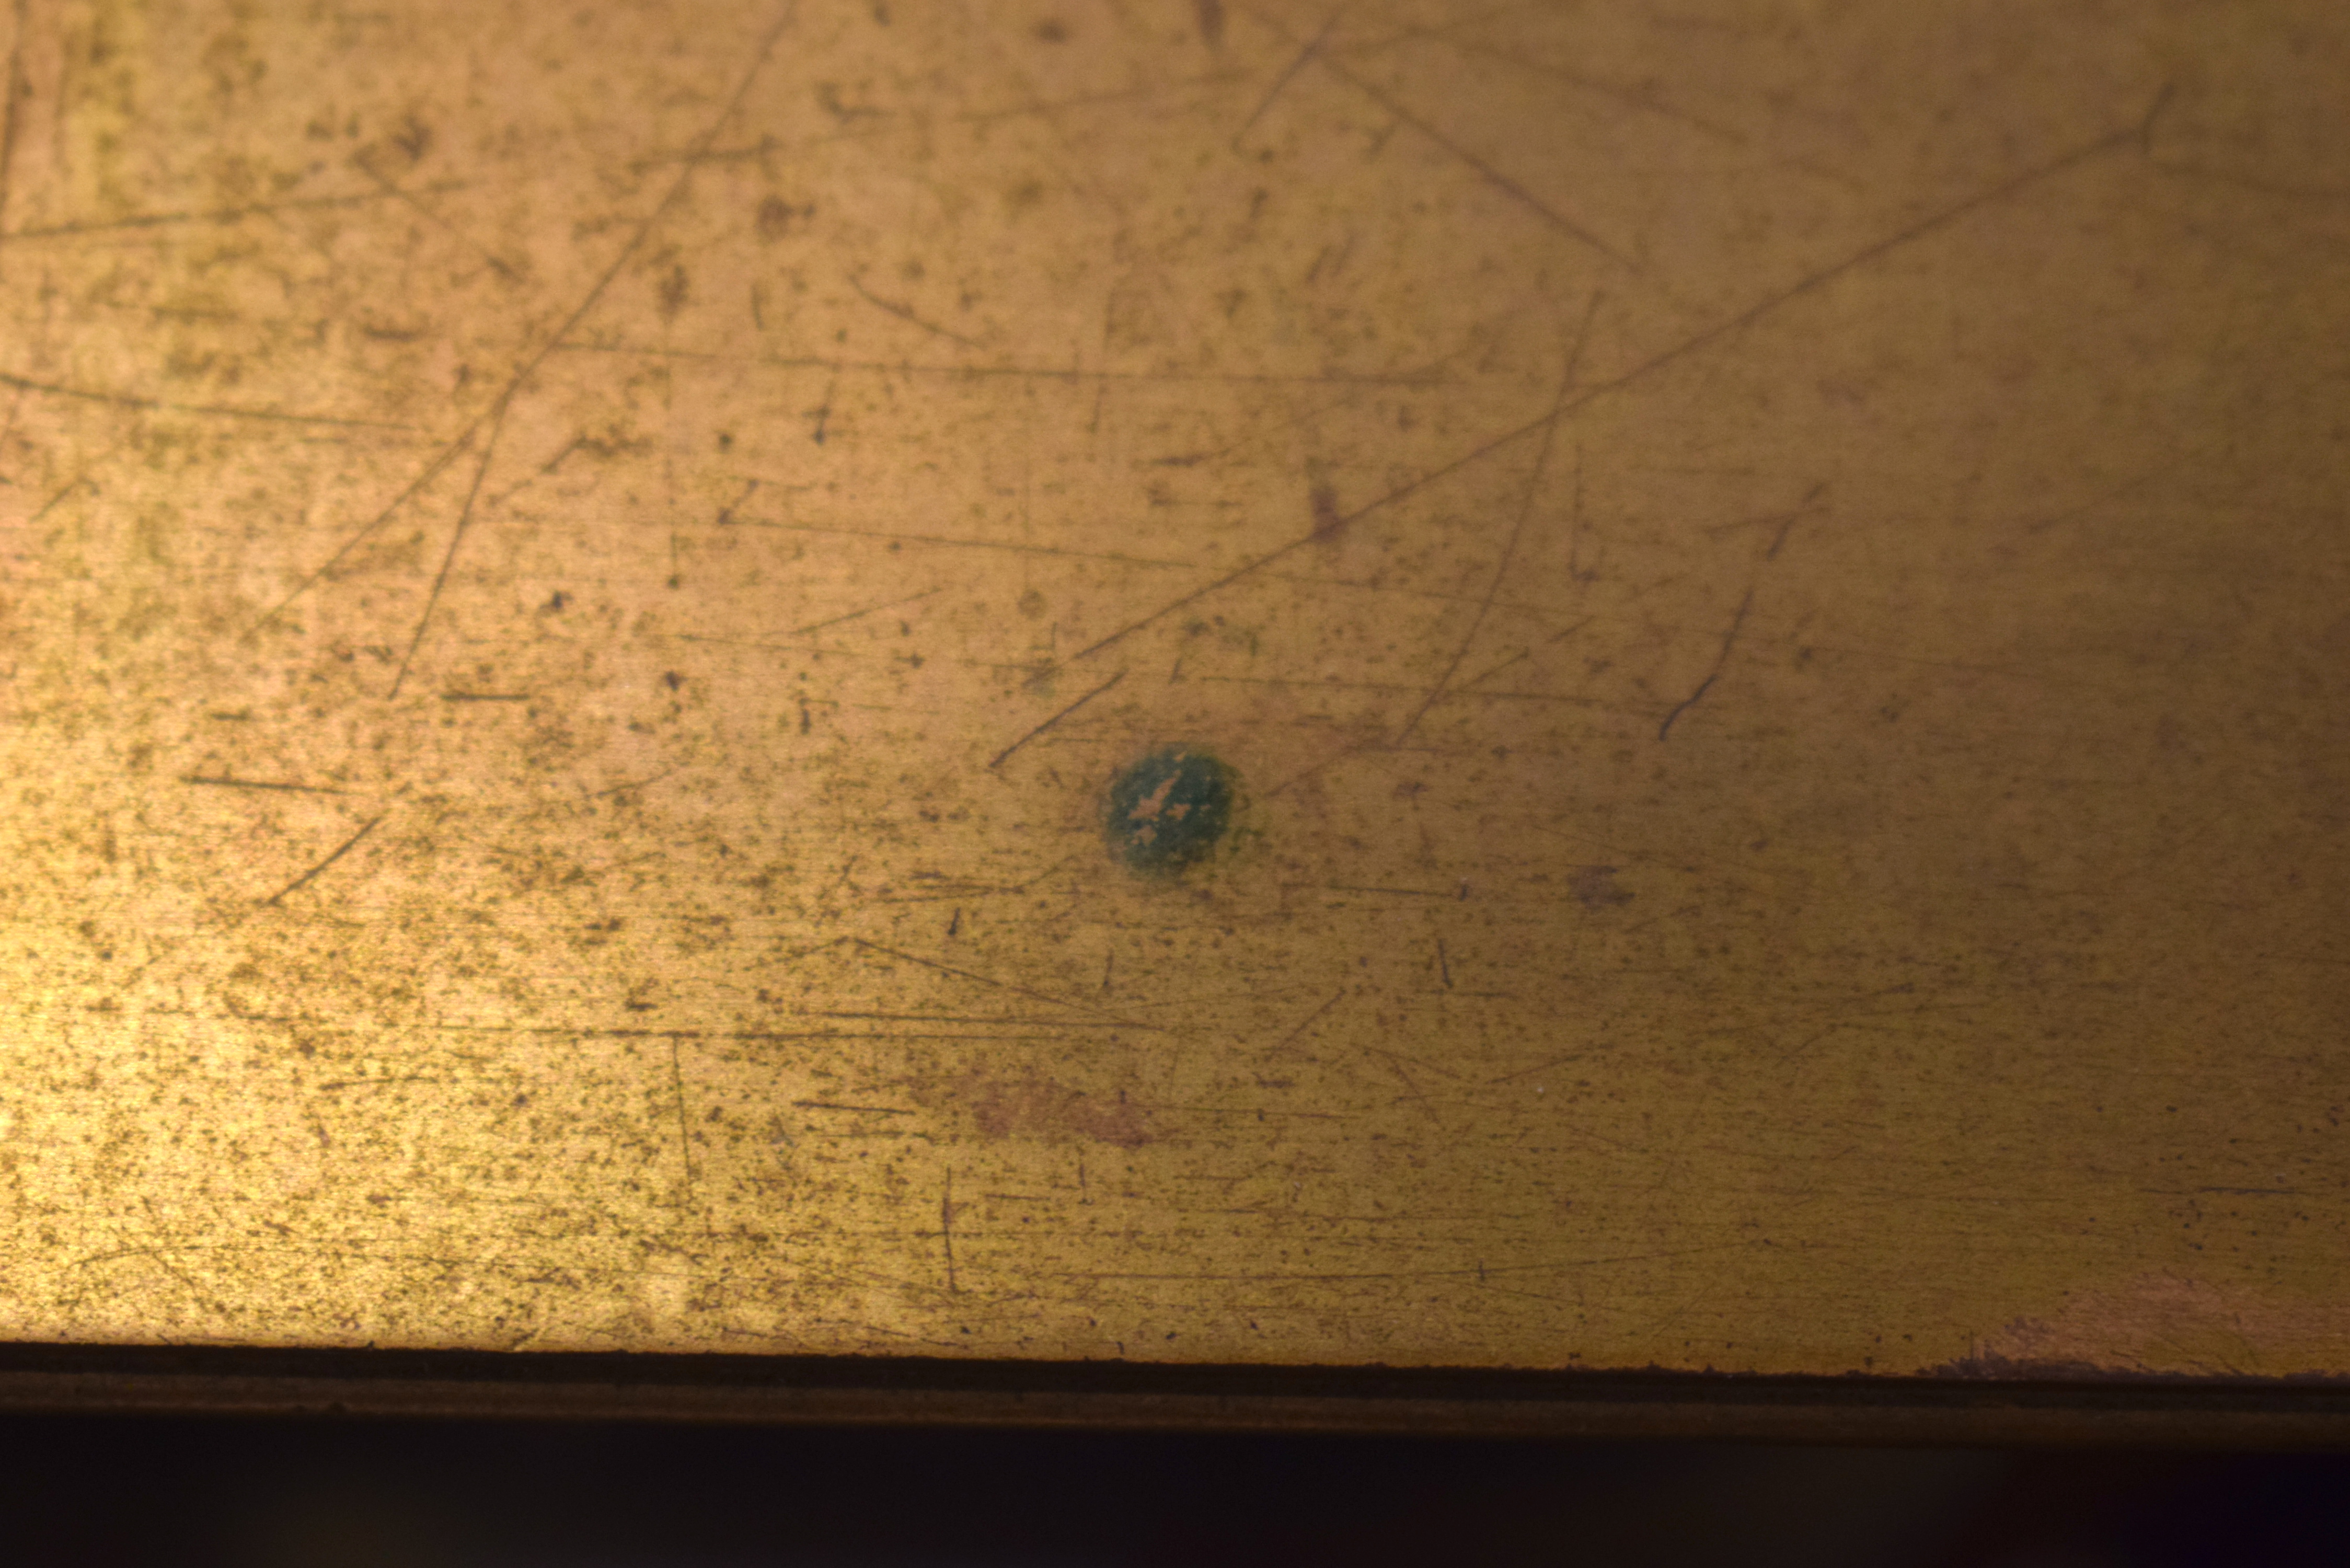 AN ANTIQUE CHAMPLEVE ENAMEL BRASS REGULATOR MANTEL CLOCK. 29 cm x 15 cm. - Image 5 of 6